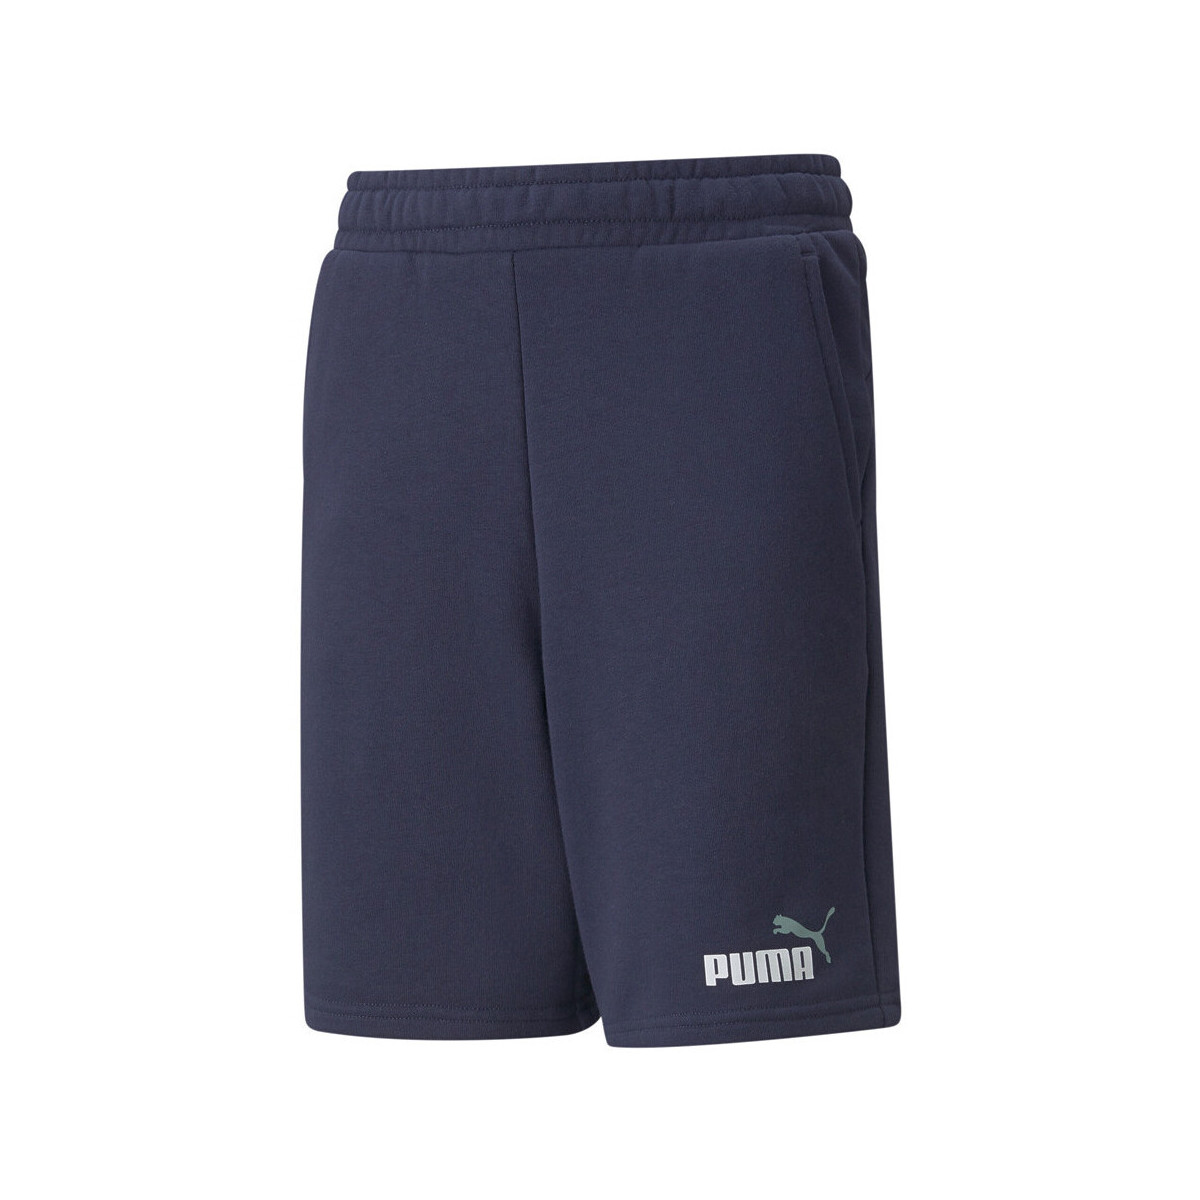 textil Niño Shorts / Bermudas Puma  Azul